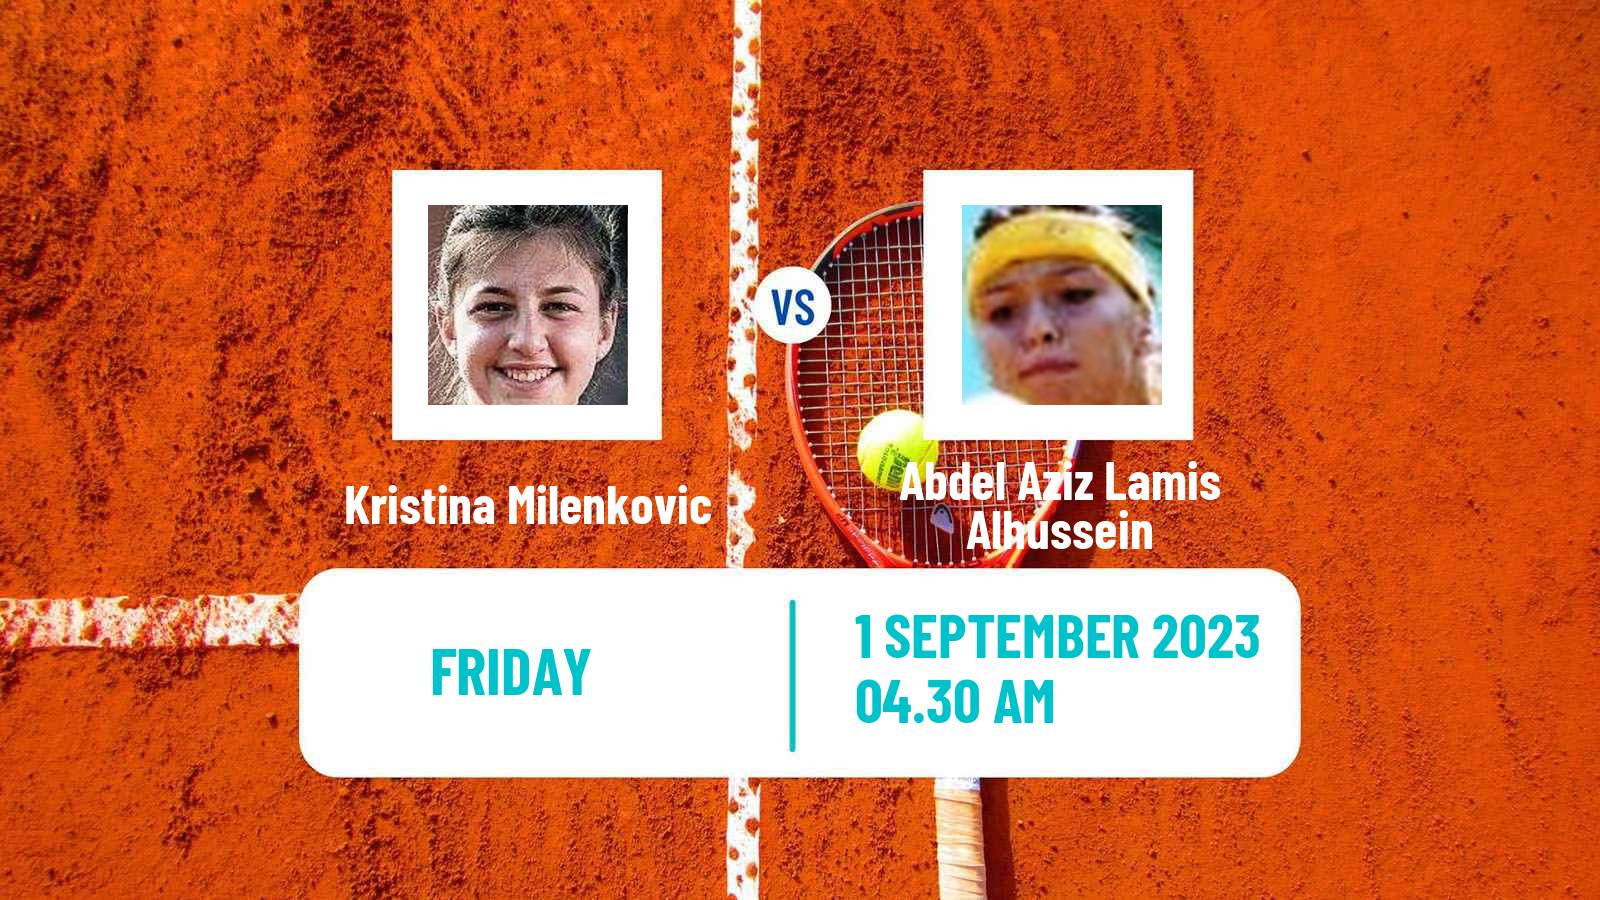 Tennis ITF W15 Monastir 30 Women Kristina Milenkovic - Abdel Aziz Lamis Alhussein